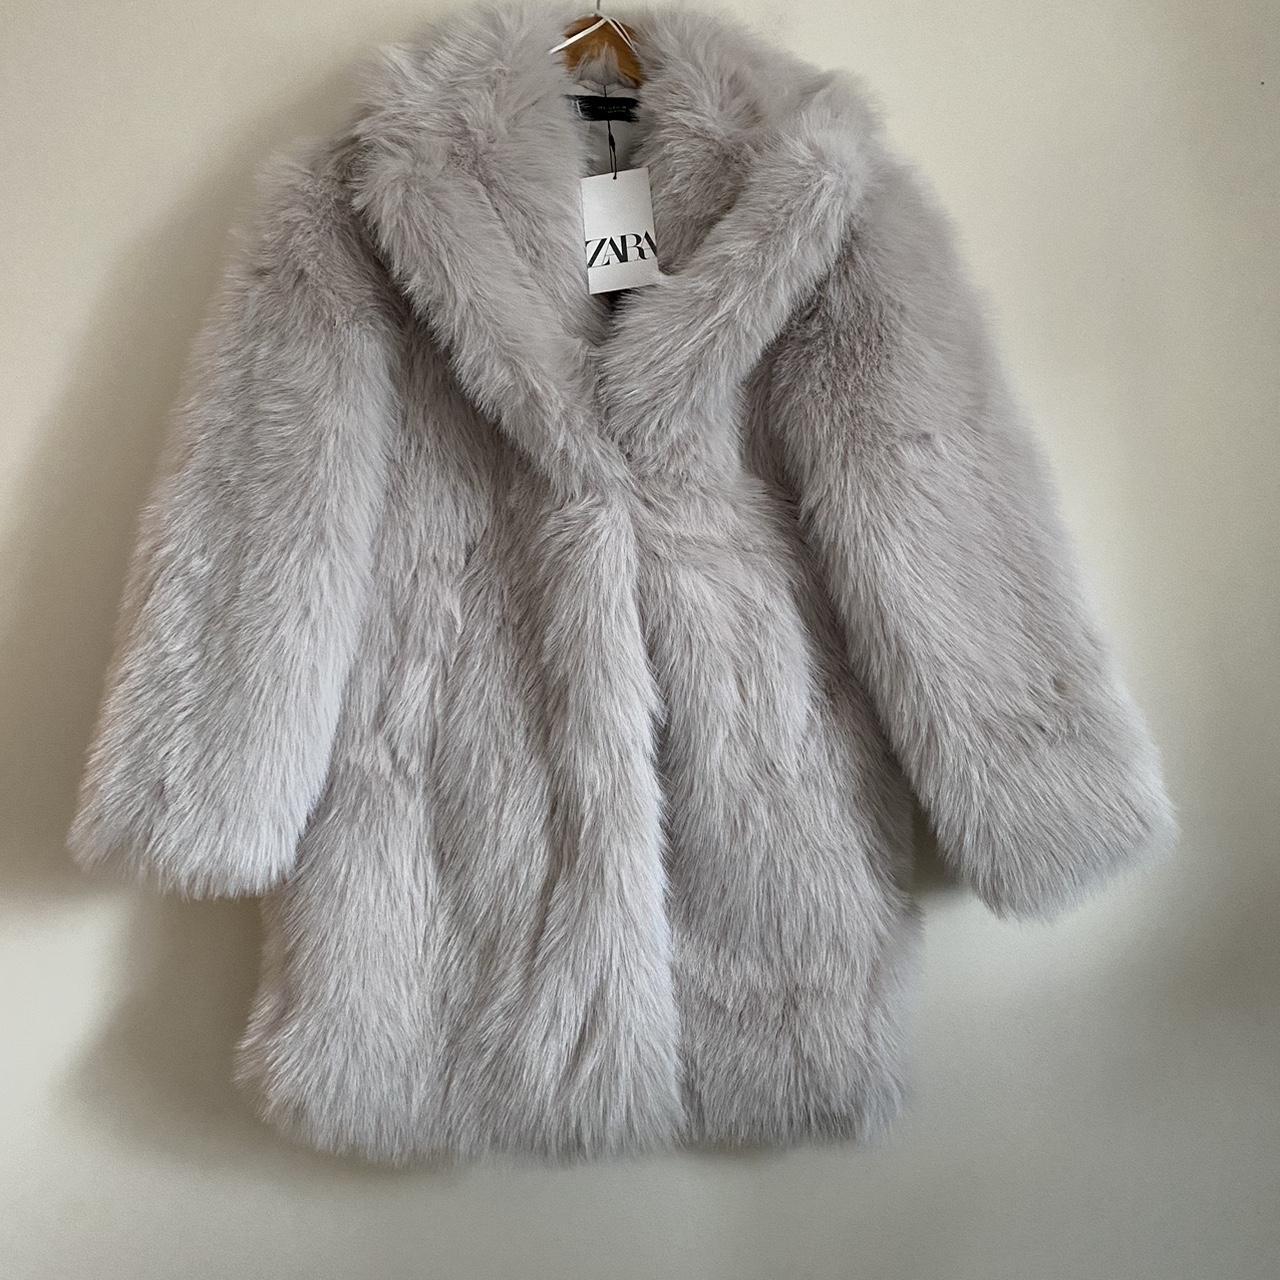 Zara faux fur coat Ecru Size S and M available ... - Depop